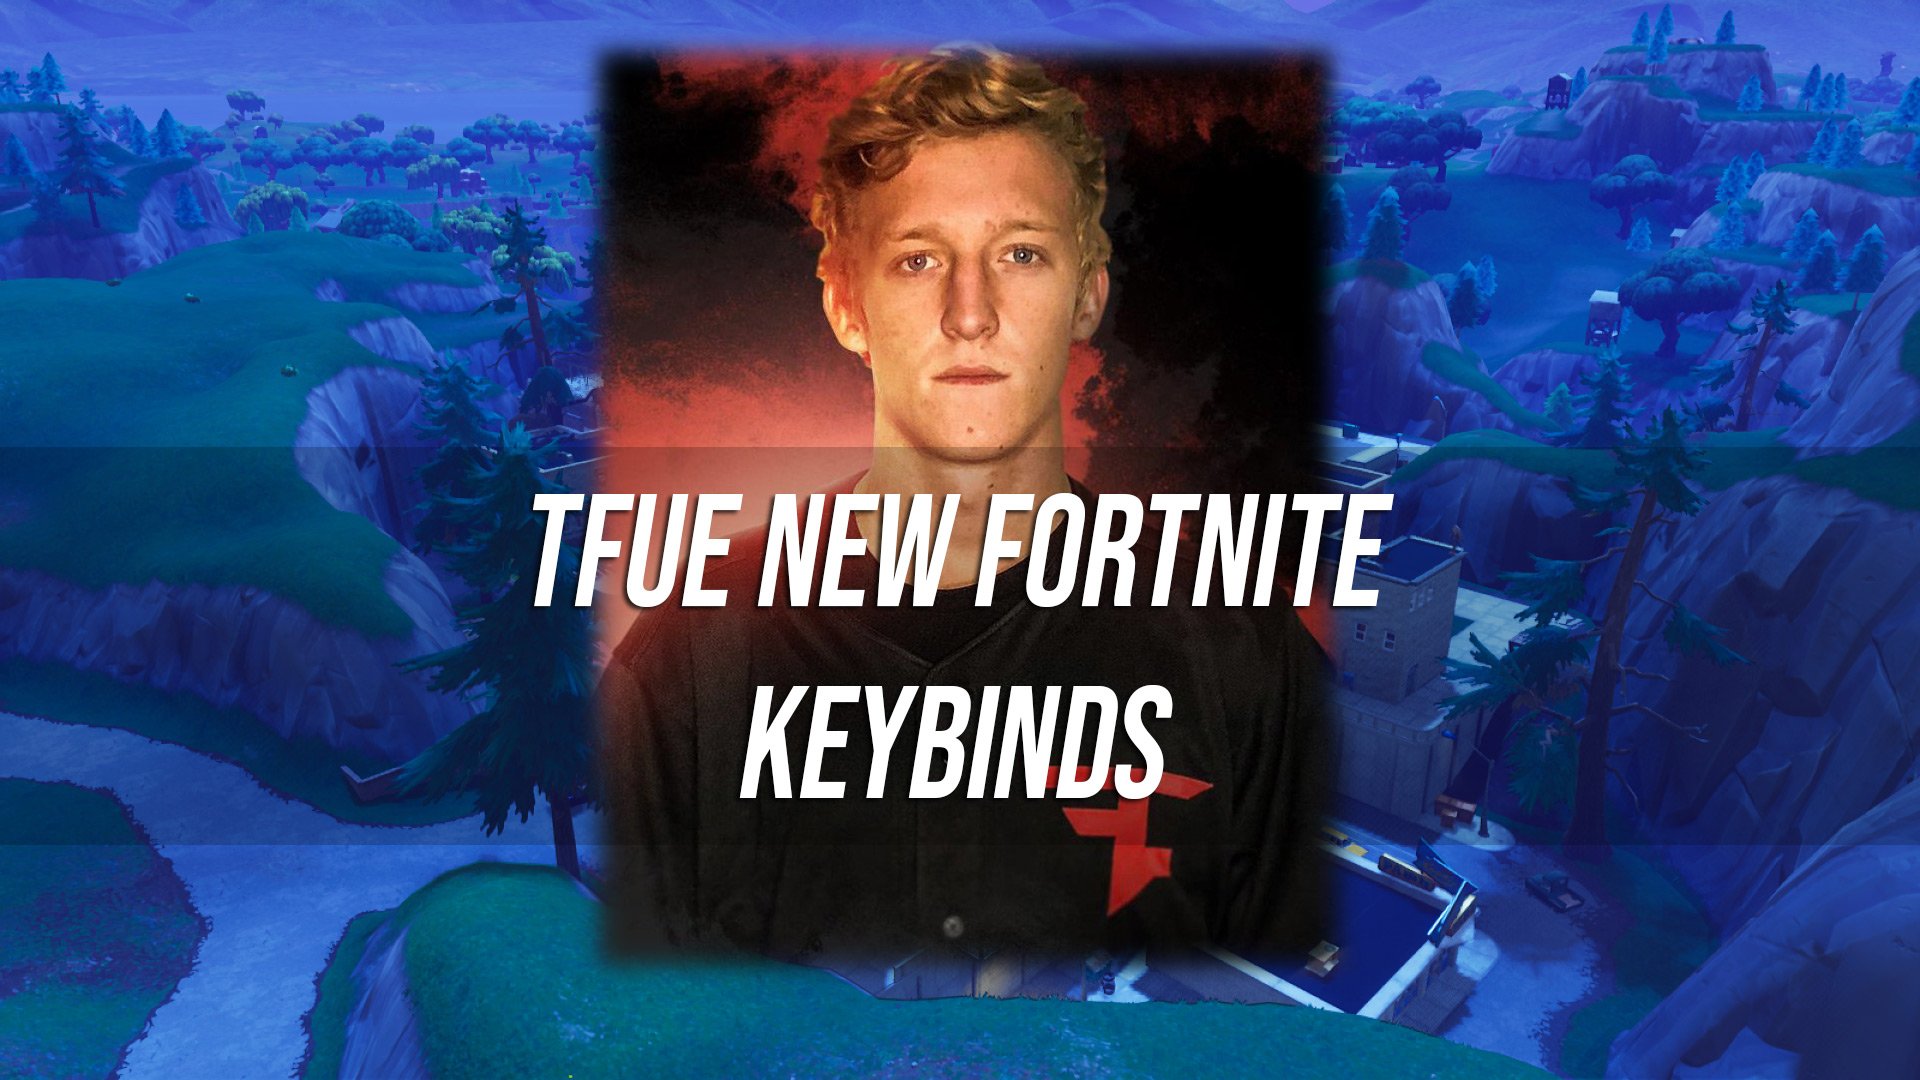 tfue s new fortnite keybinds - fortnite keybind generator